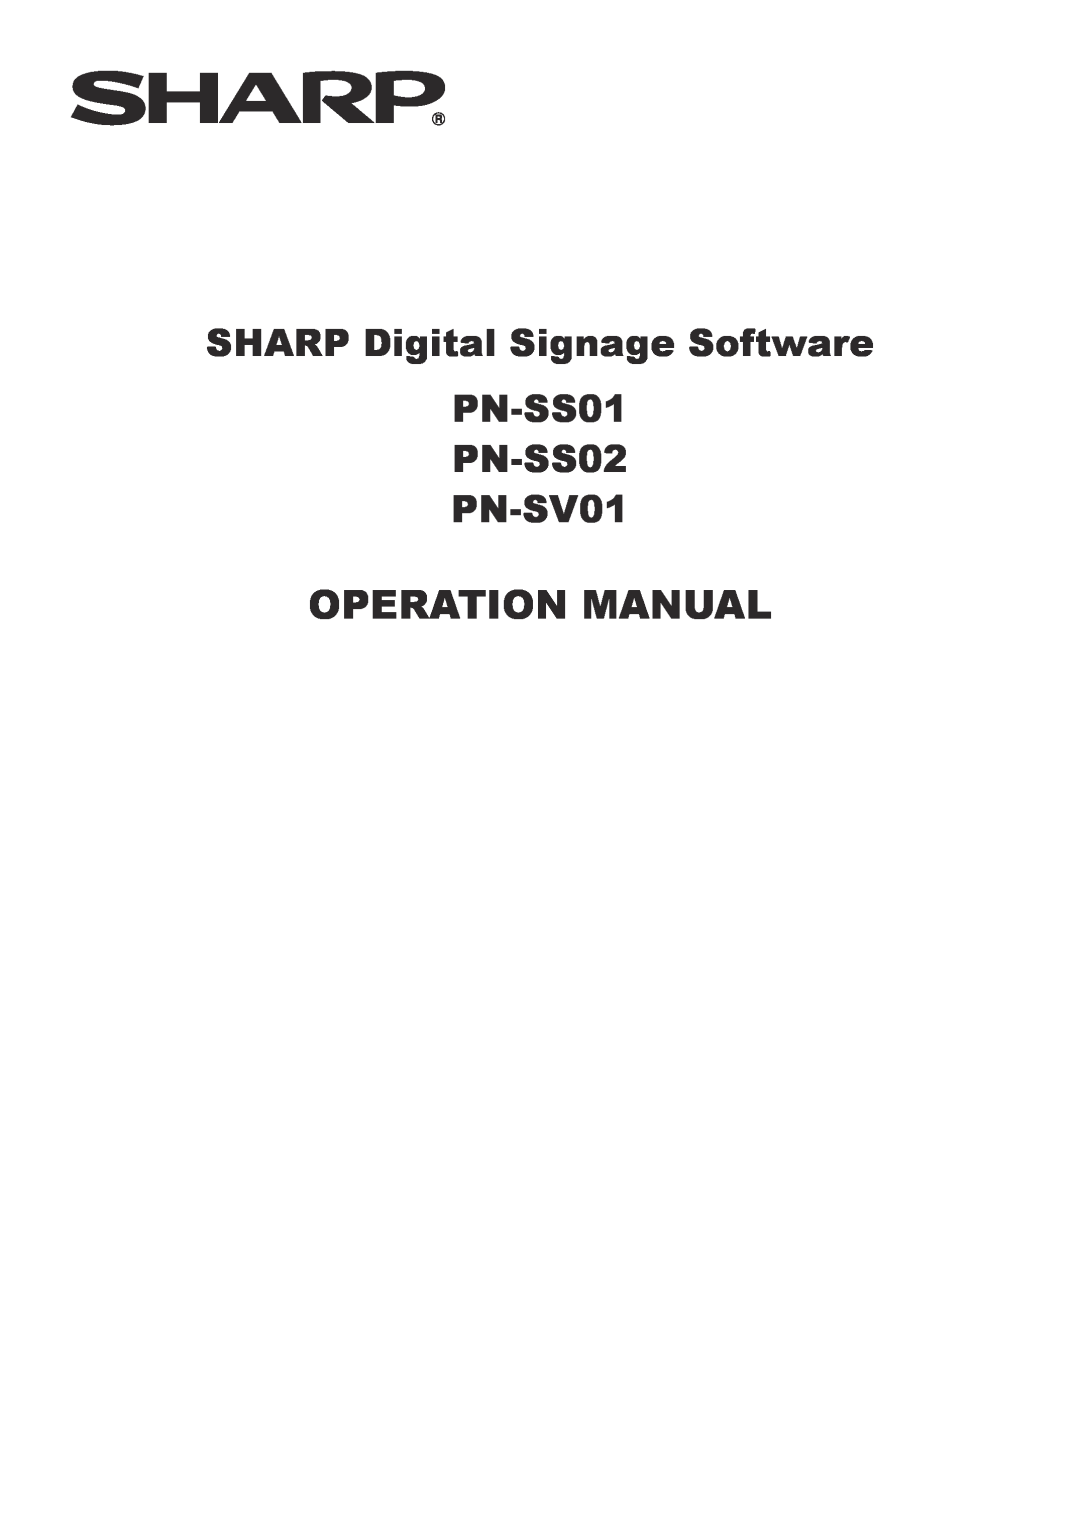 Sharp PNSV01 operation manual Operation Manual, SHARP Digital Signage Software, PN-SS01 PN-SS02 PN-SV01 